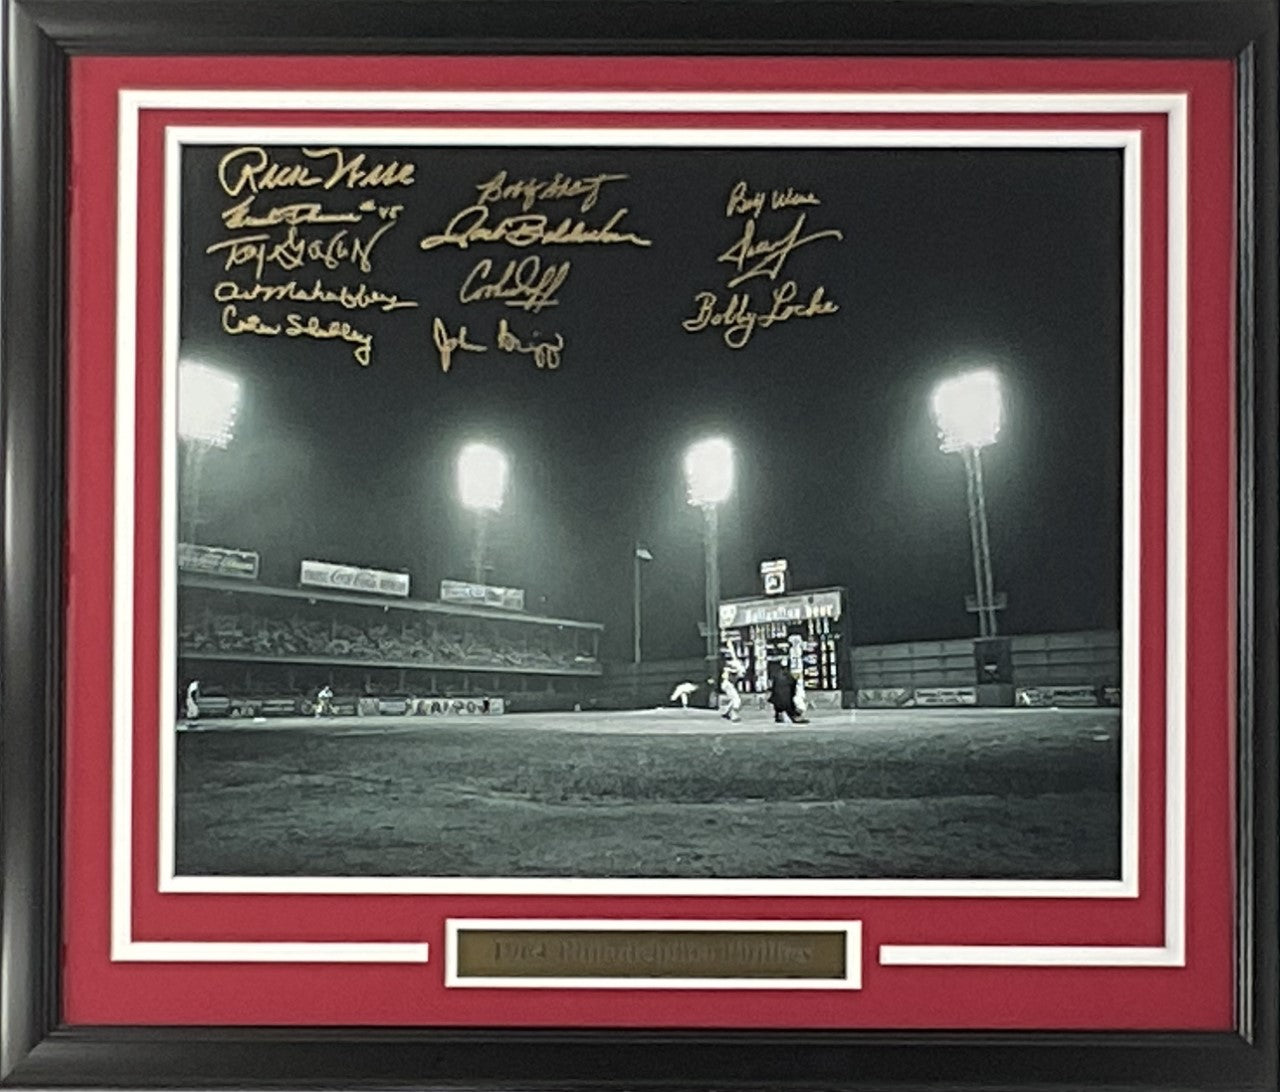 Robin Yount Autographed 8x10 Photograph - Batting (JSA)